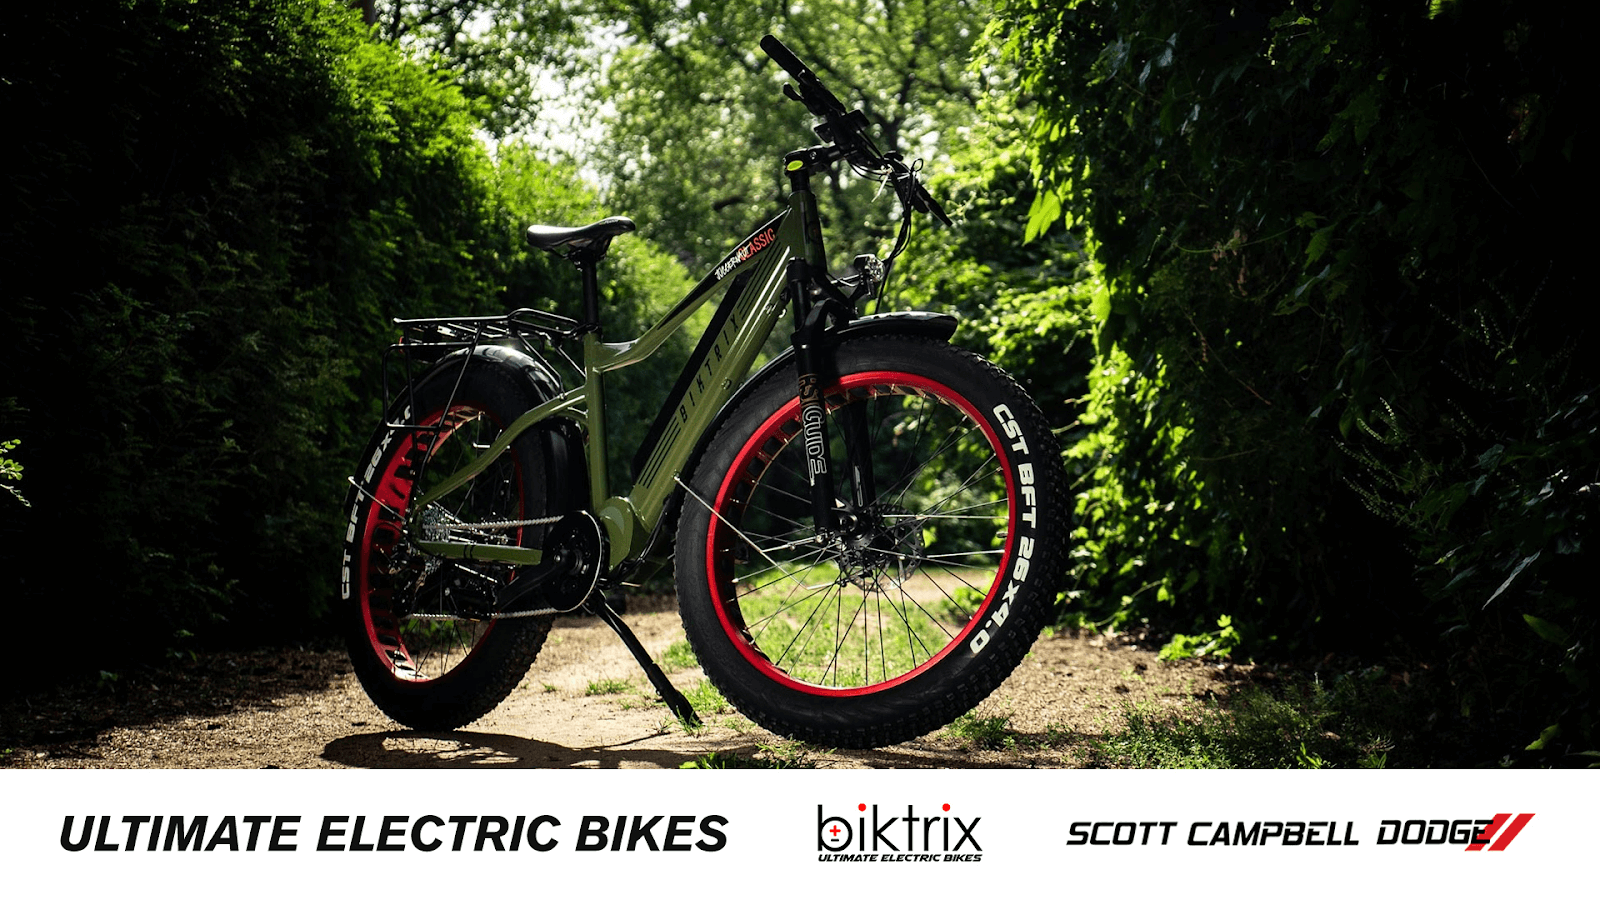 Biktrix electric bike in the forest